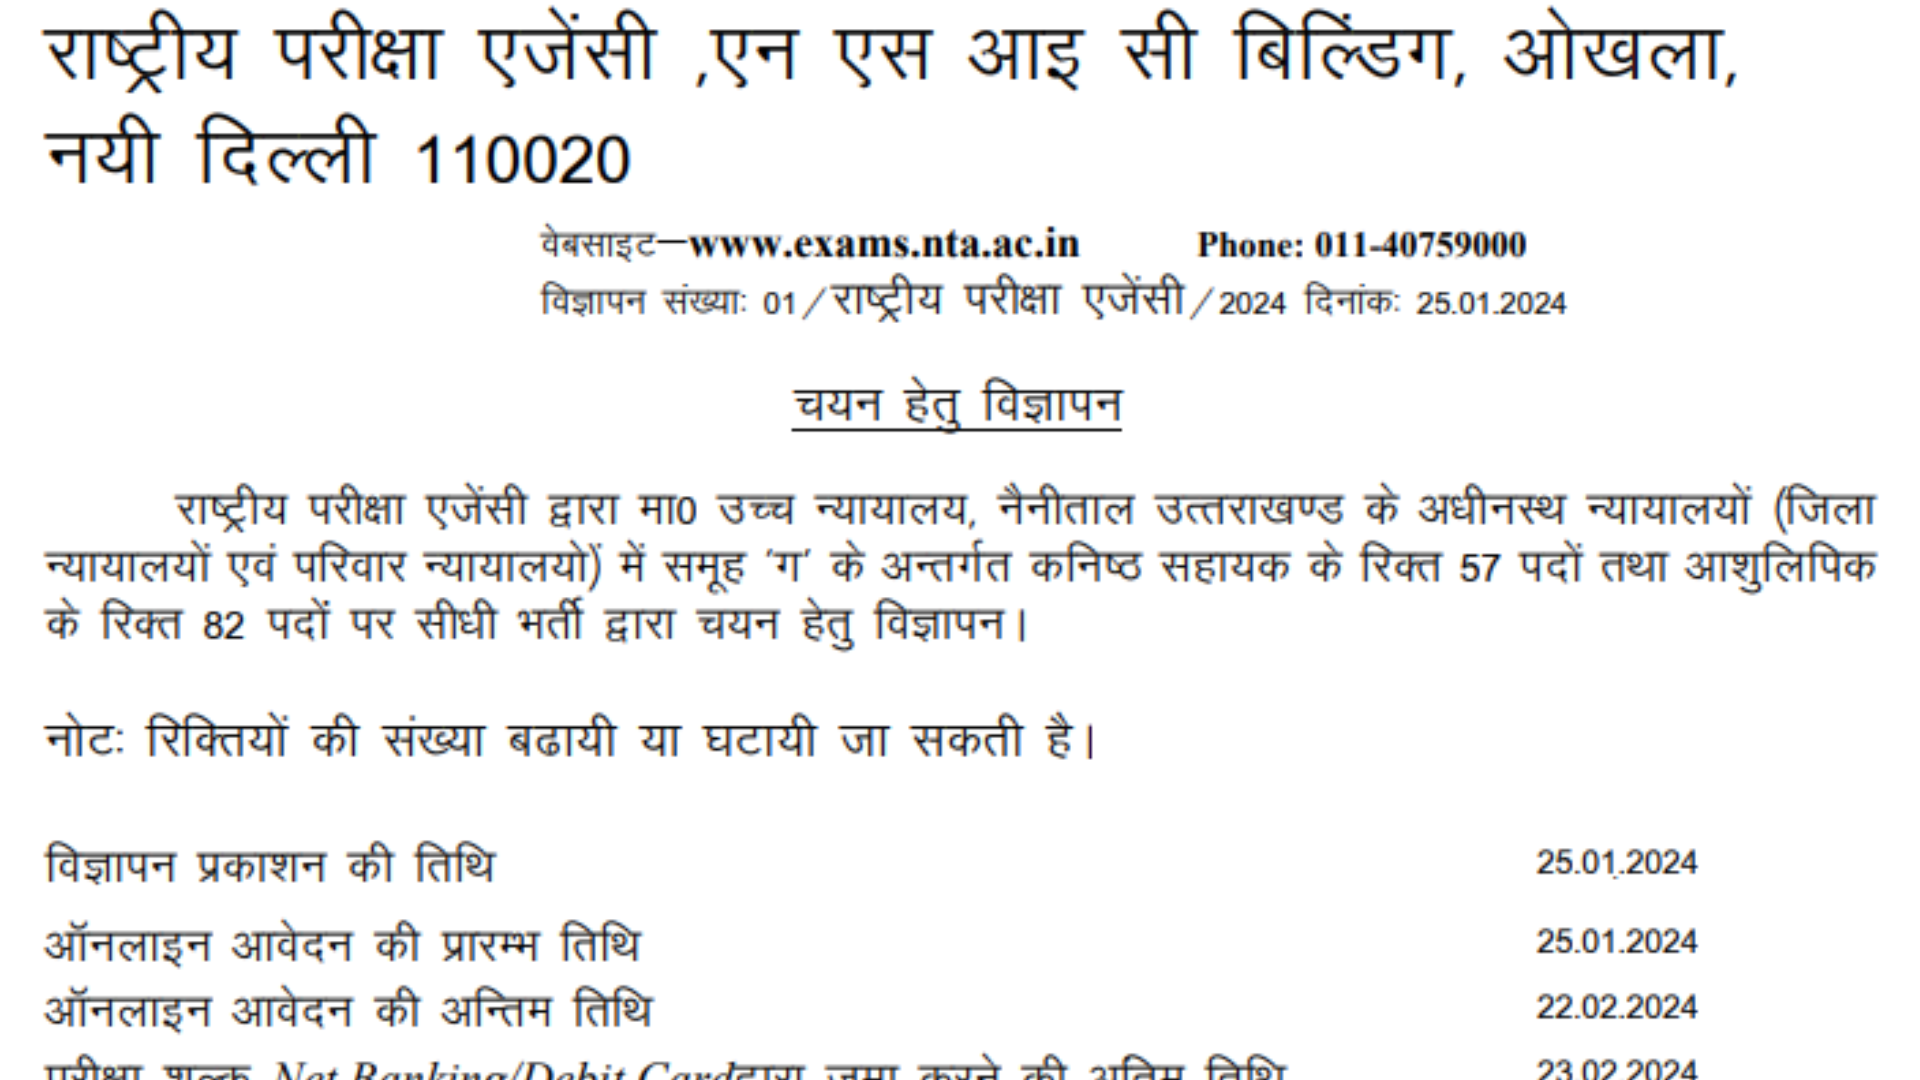 Uttarakhand High Court Recruitment 2024 Notification and Online Application Form